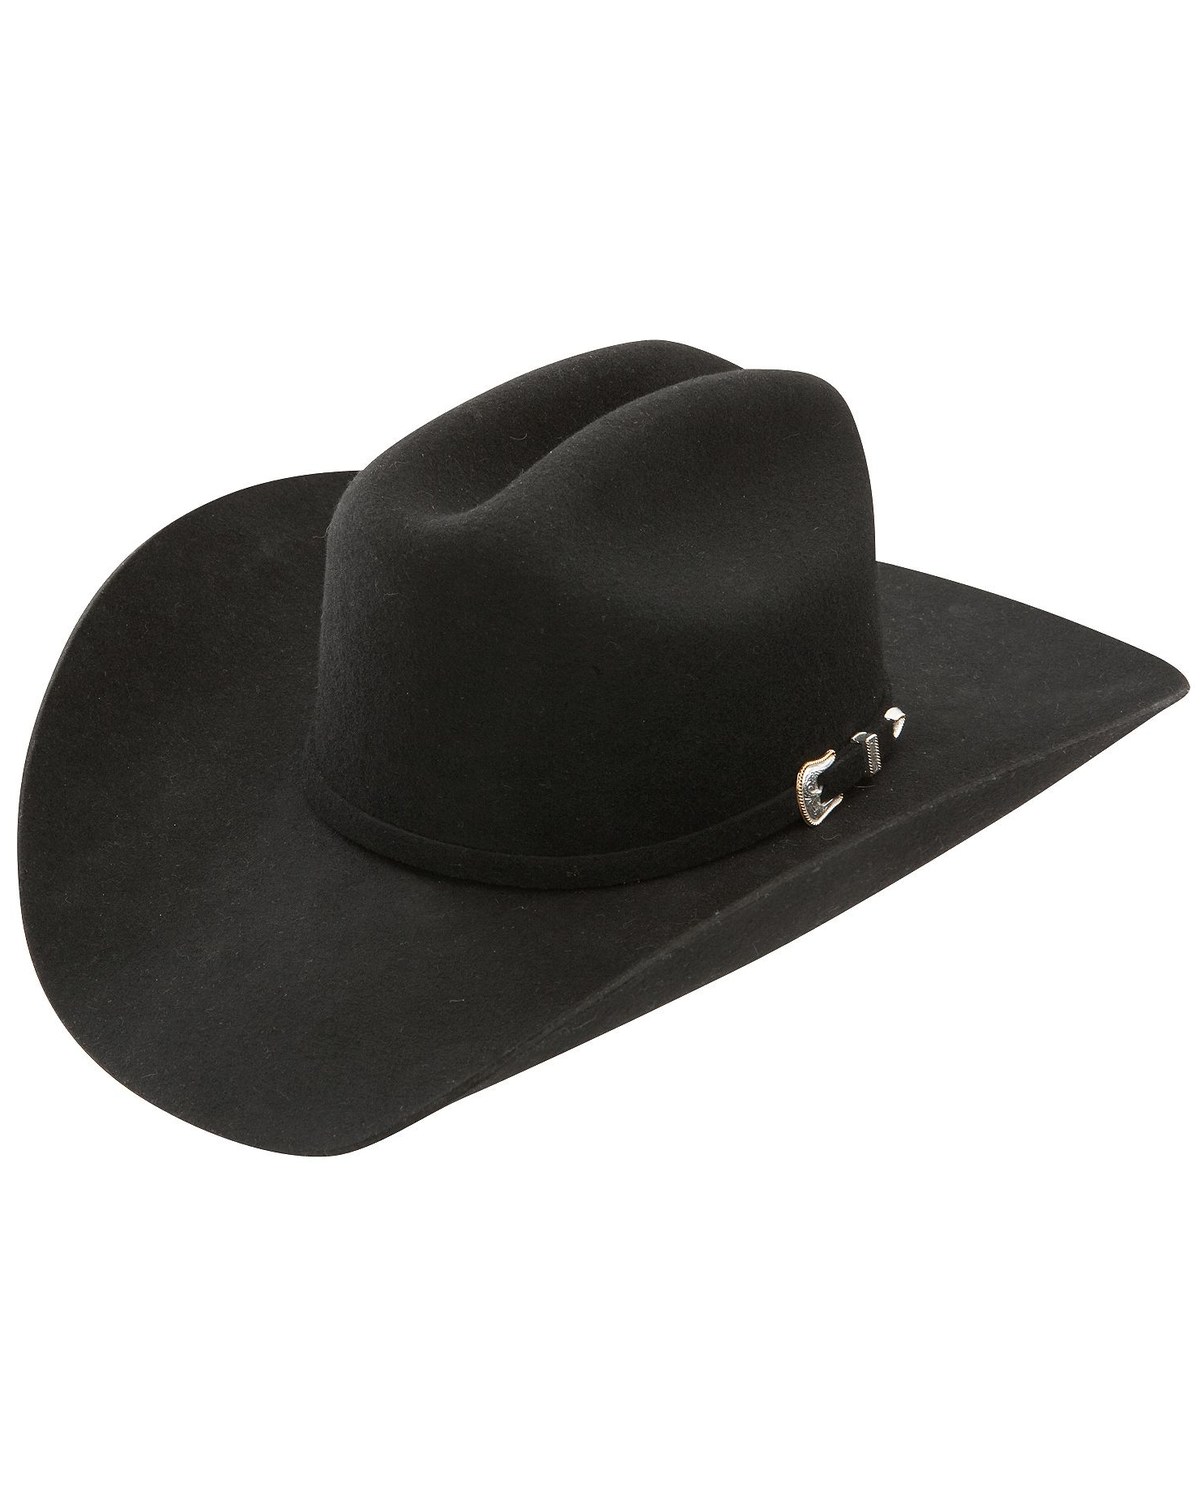 Overland Outback Crushable Wool Felt Cowboy Hat Overland Cowboy Hats Snakeskin Cowboy Boots Felt Cowboy Hats